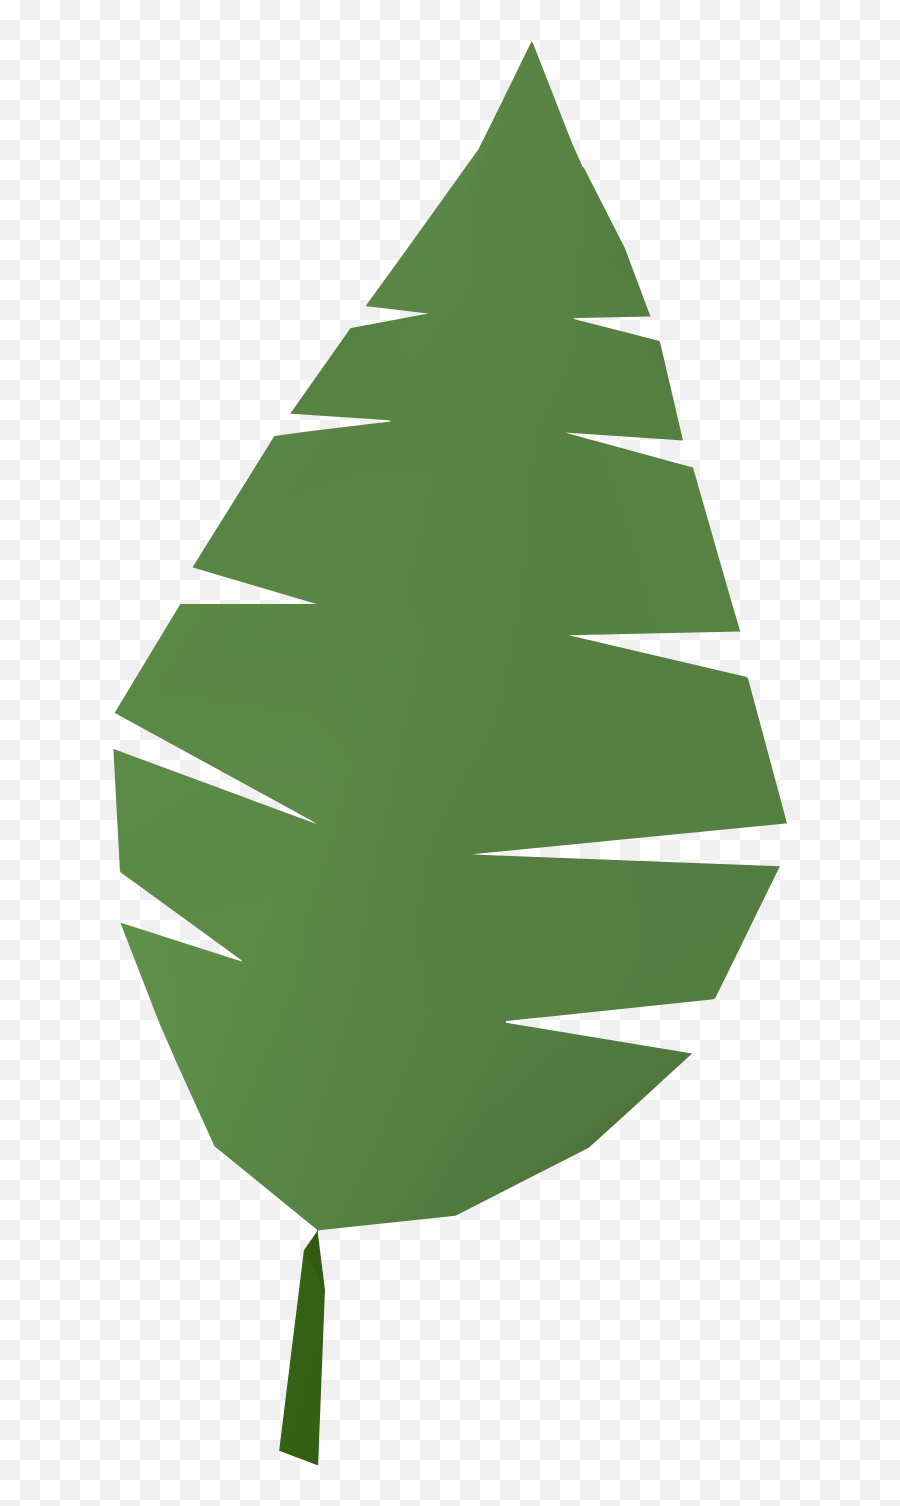 palm tree leaf template